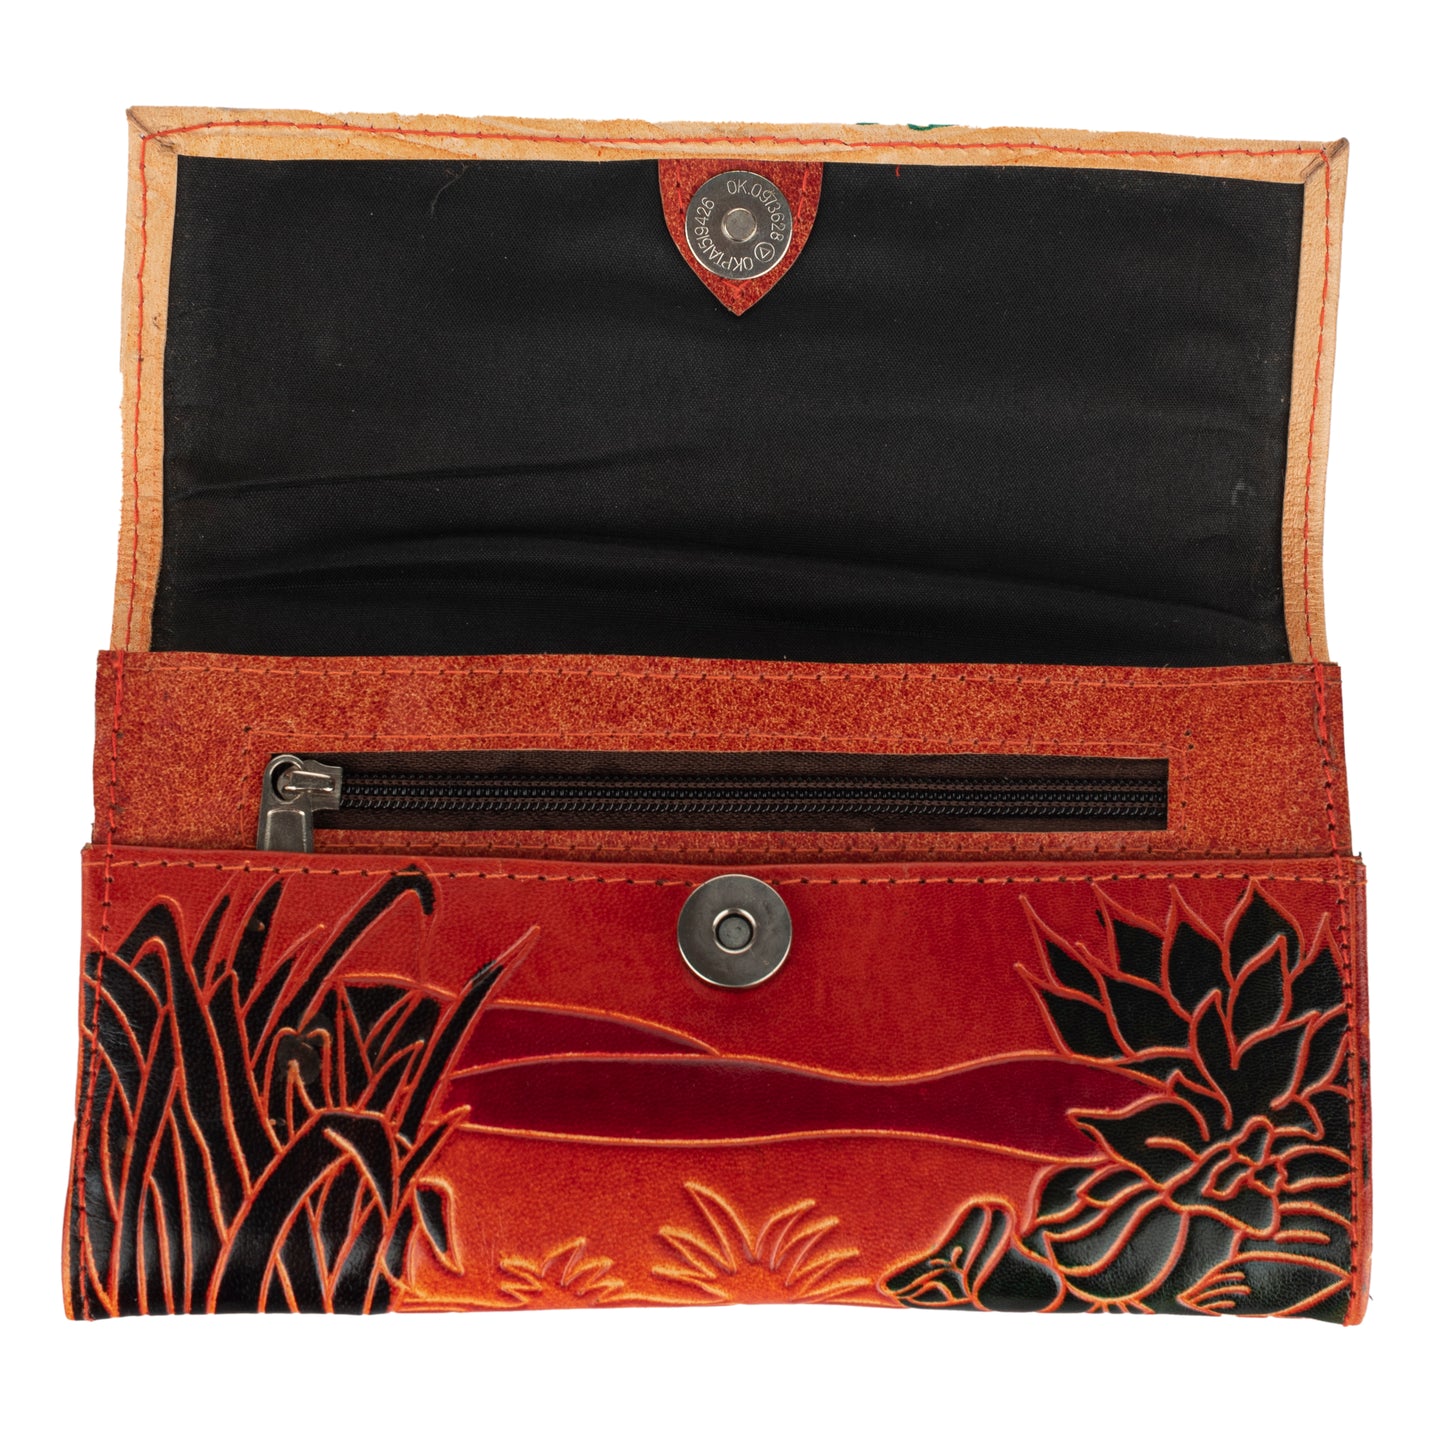 Shantiniketan Leather Small Clutch Handbag (6*3.5)